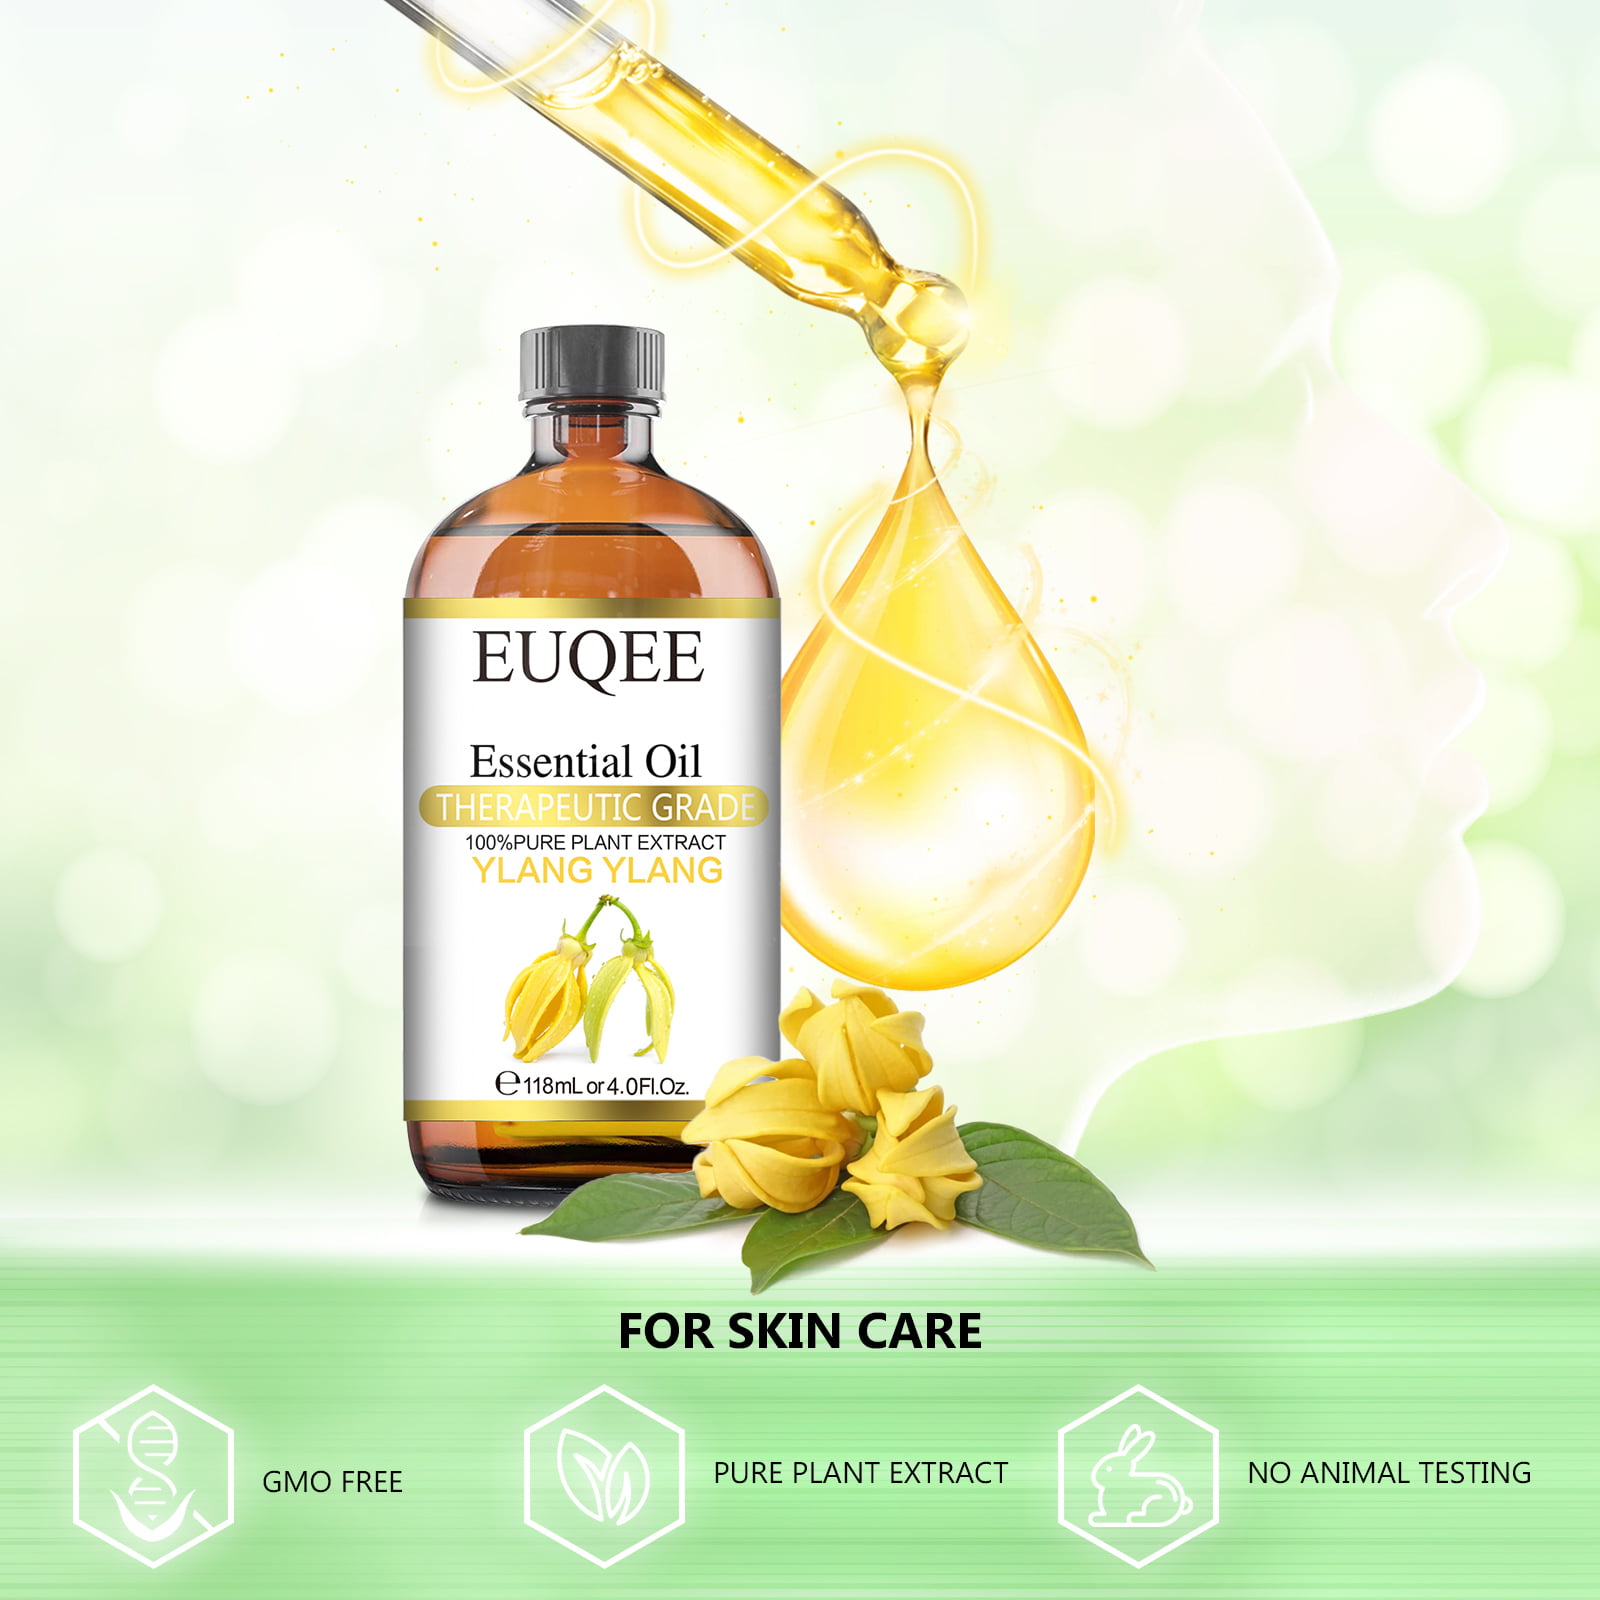 Vanilla Premium Grade Fragrance Oil - Scented Oil – Eternal Essence Oils